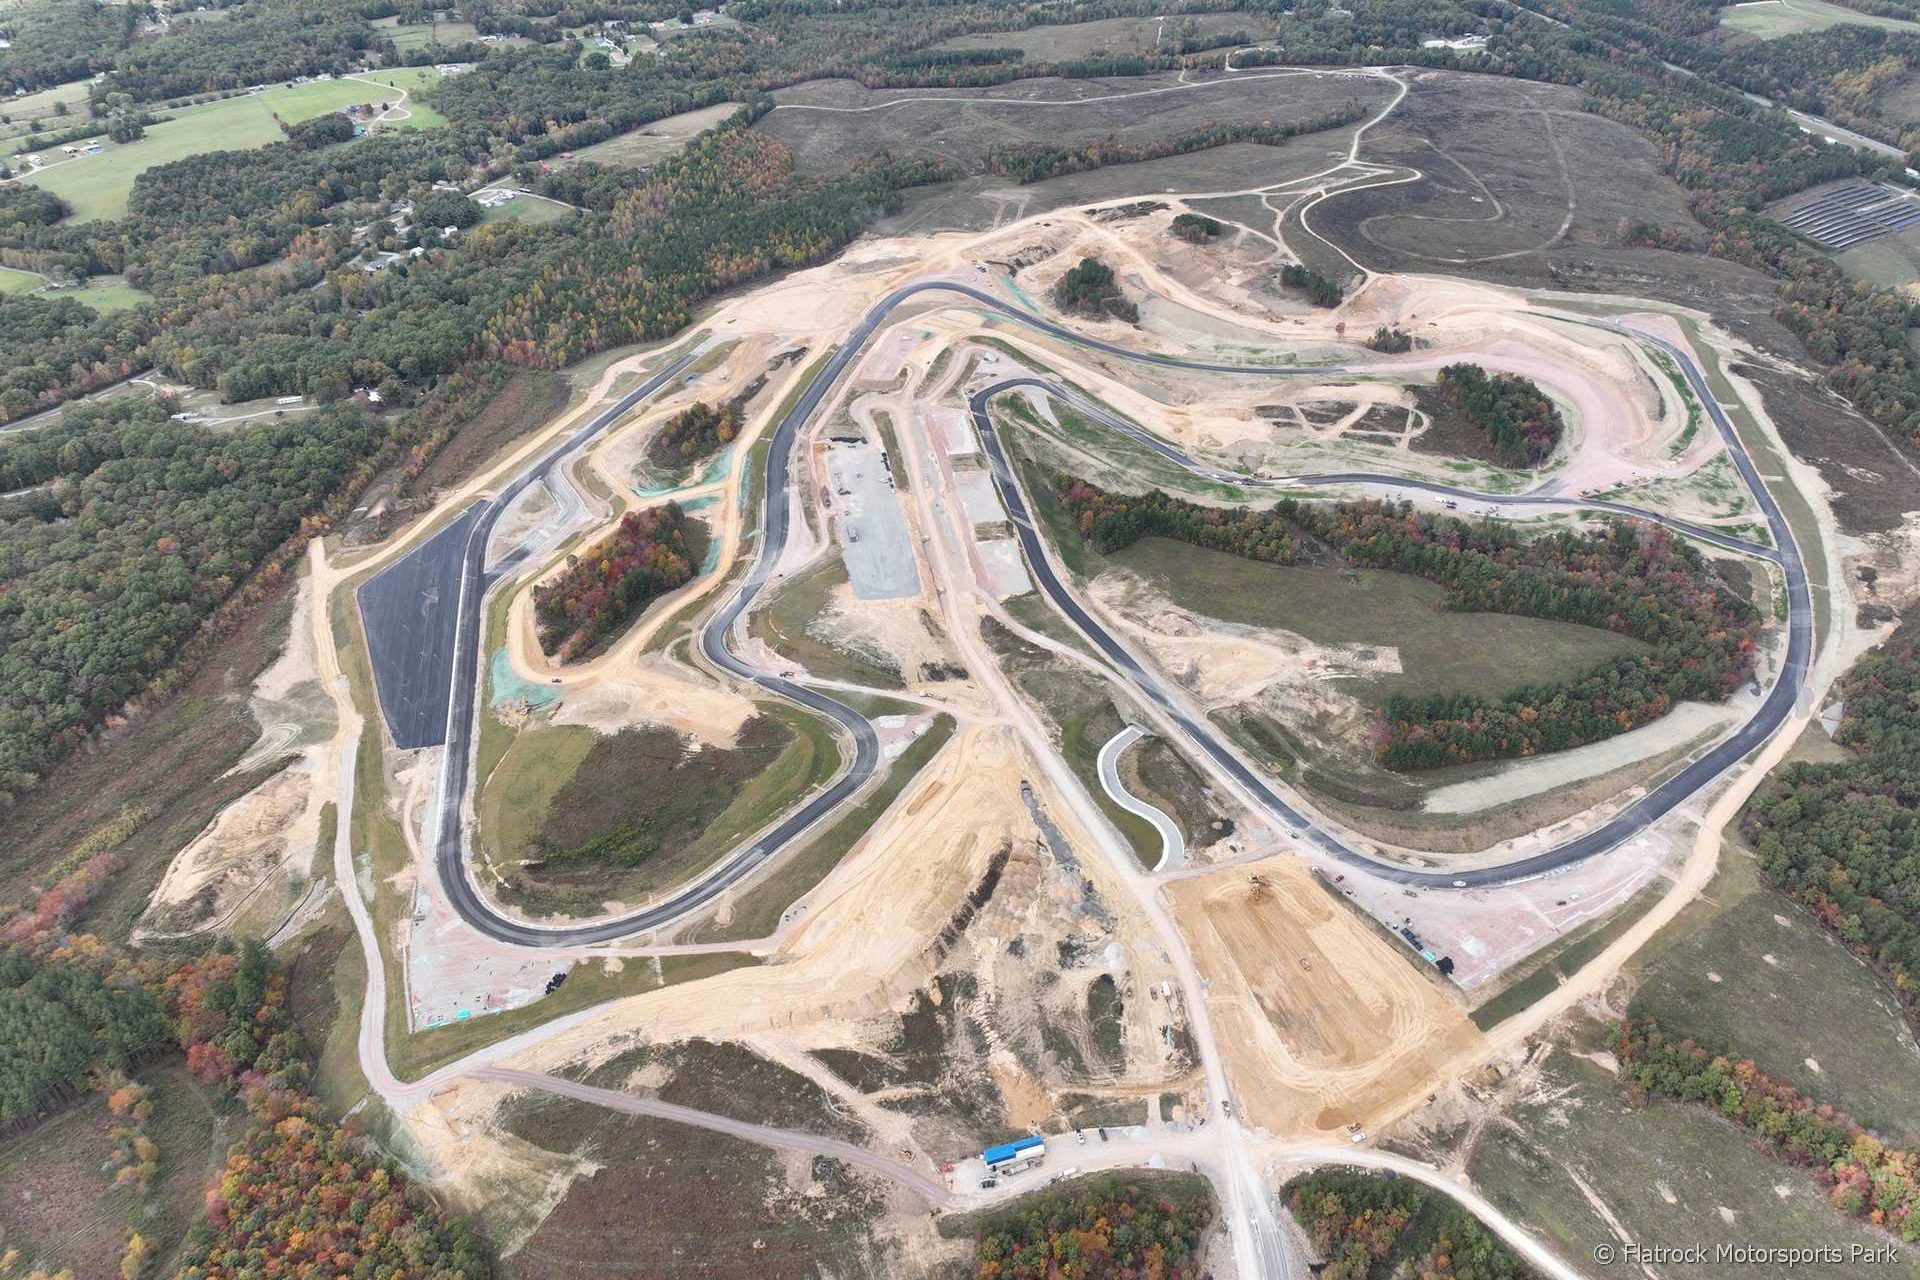 Flatrock Motorsports Park development